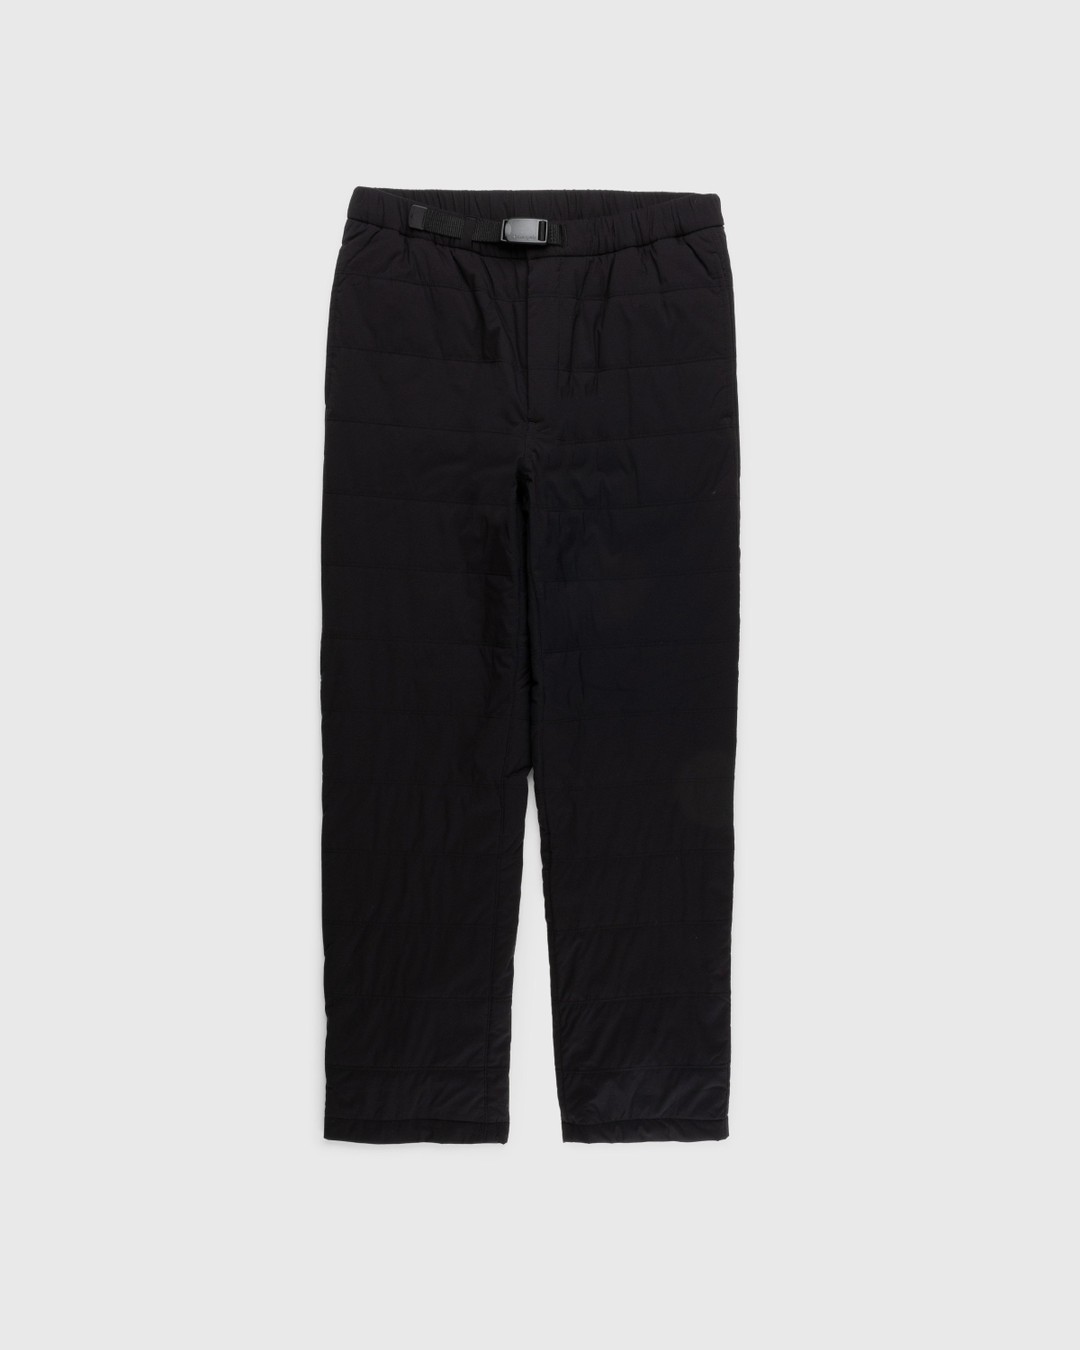 Snow Peak – Flexible Insulated Pants Black - Active Pants - Black - Image 1